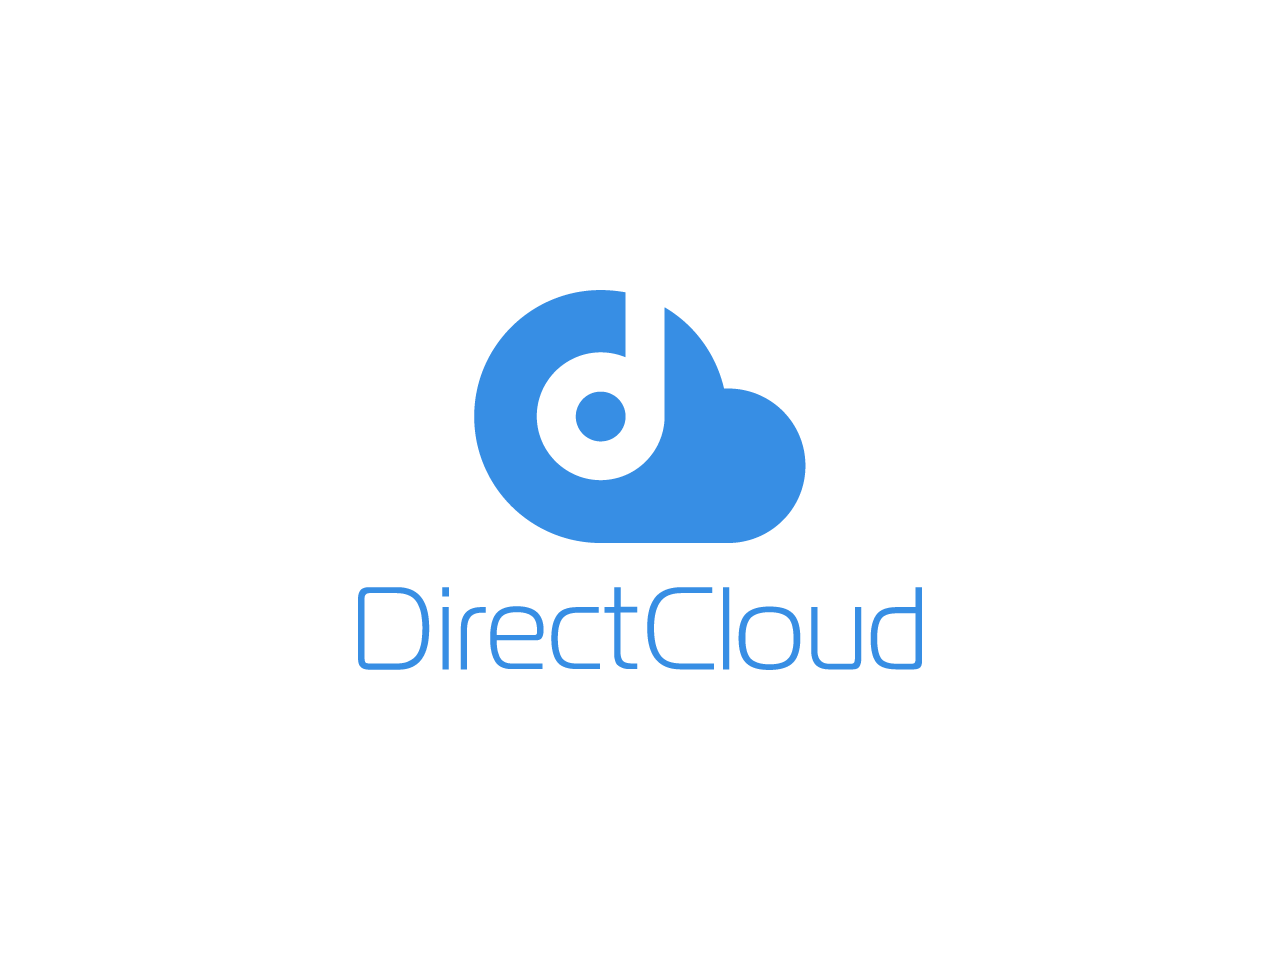 『DirectCloud』はすでに導入社数が2000社を突破。今後もさらなる成長を見込む。